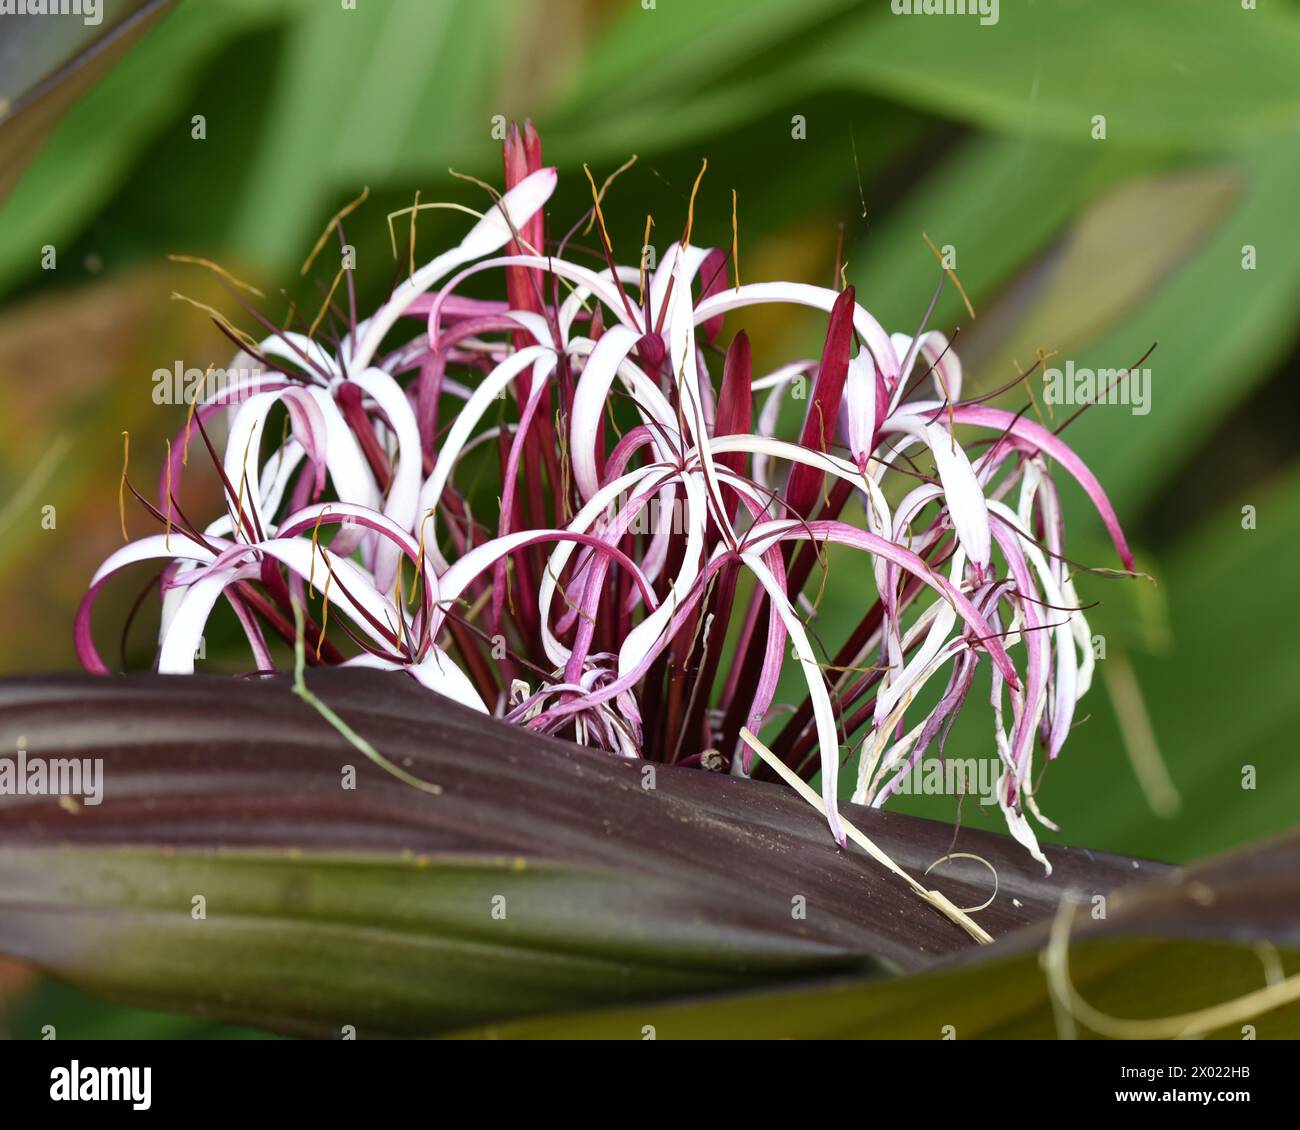 Close-up image of Giant Lily (Crinum asiaticum) Stock Photo